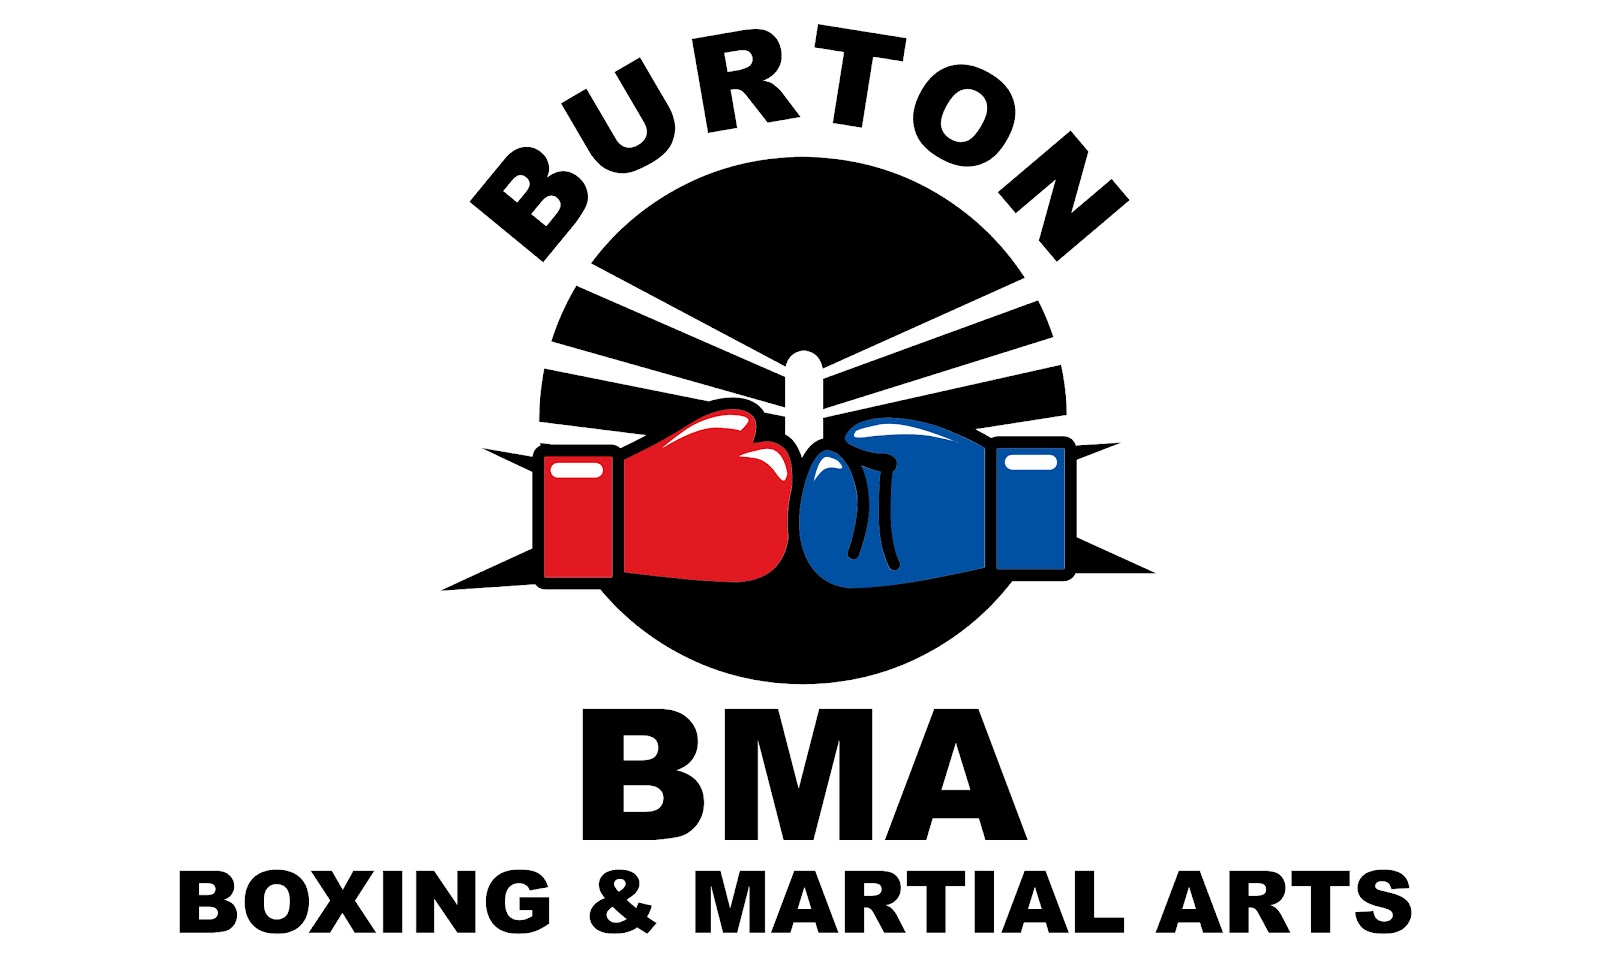 Burton Boxing & Martial Arts Ltd - Martial Arts Classes in Burton on Trent